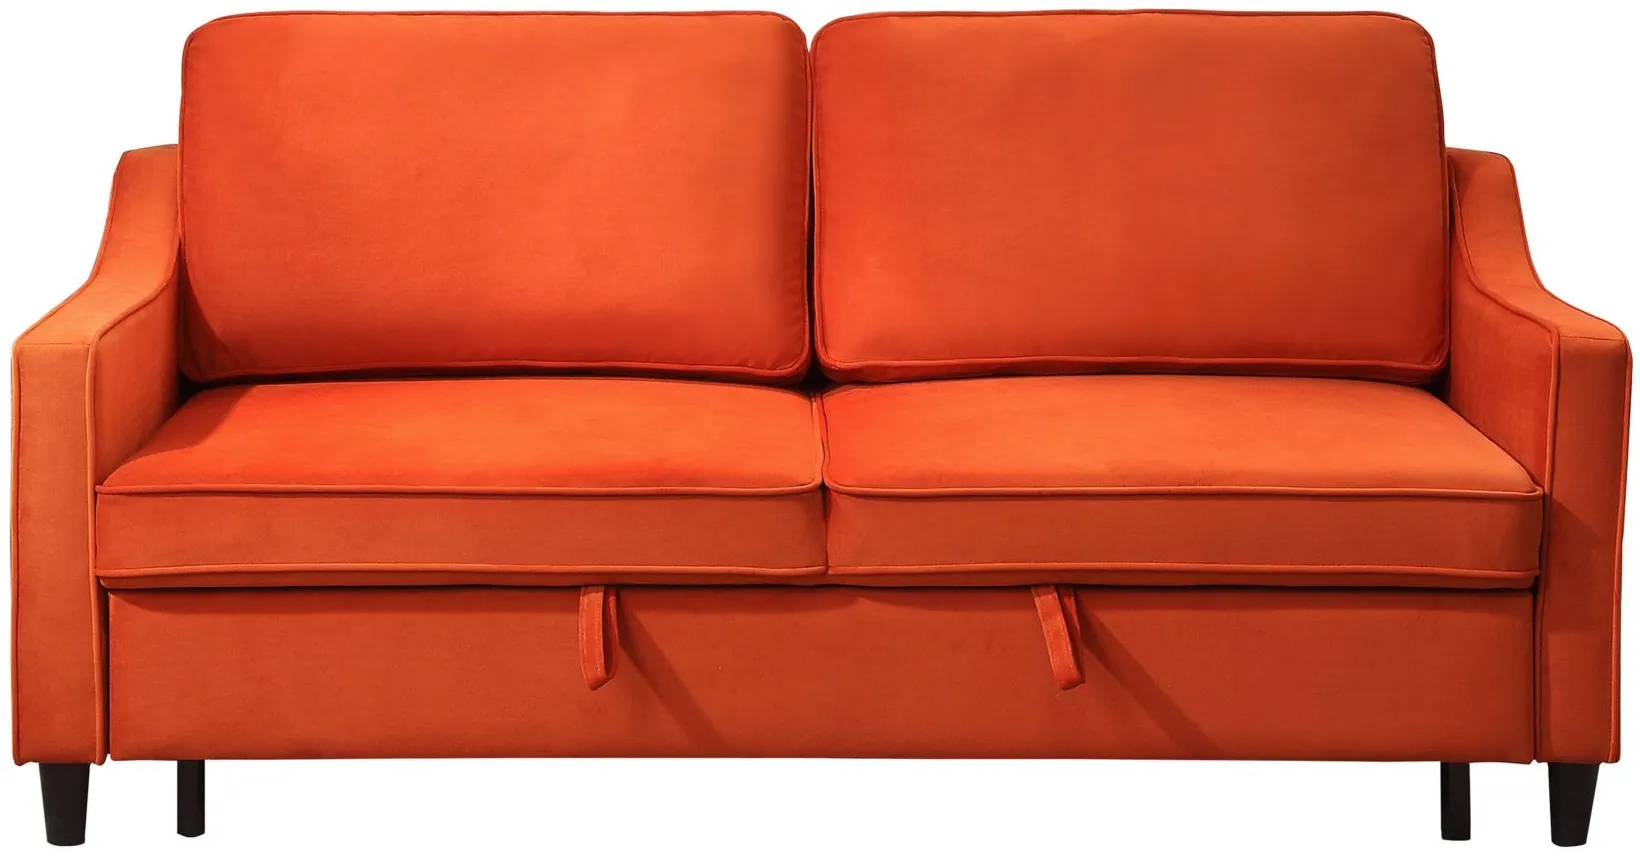 Dickinson Convertible Sofa in Orange by Homelegance